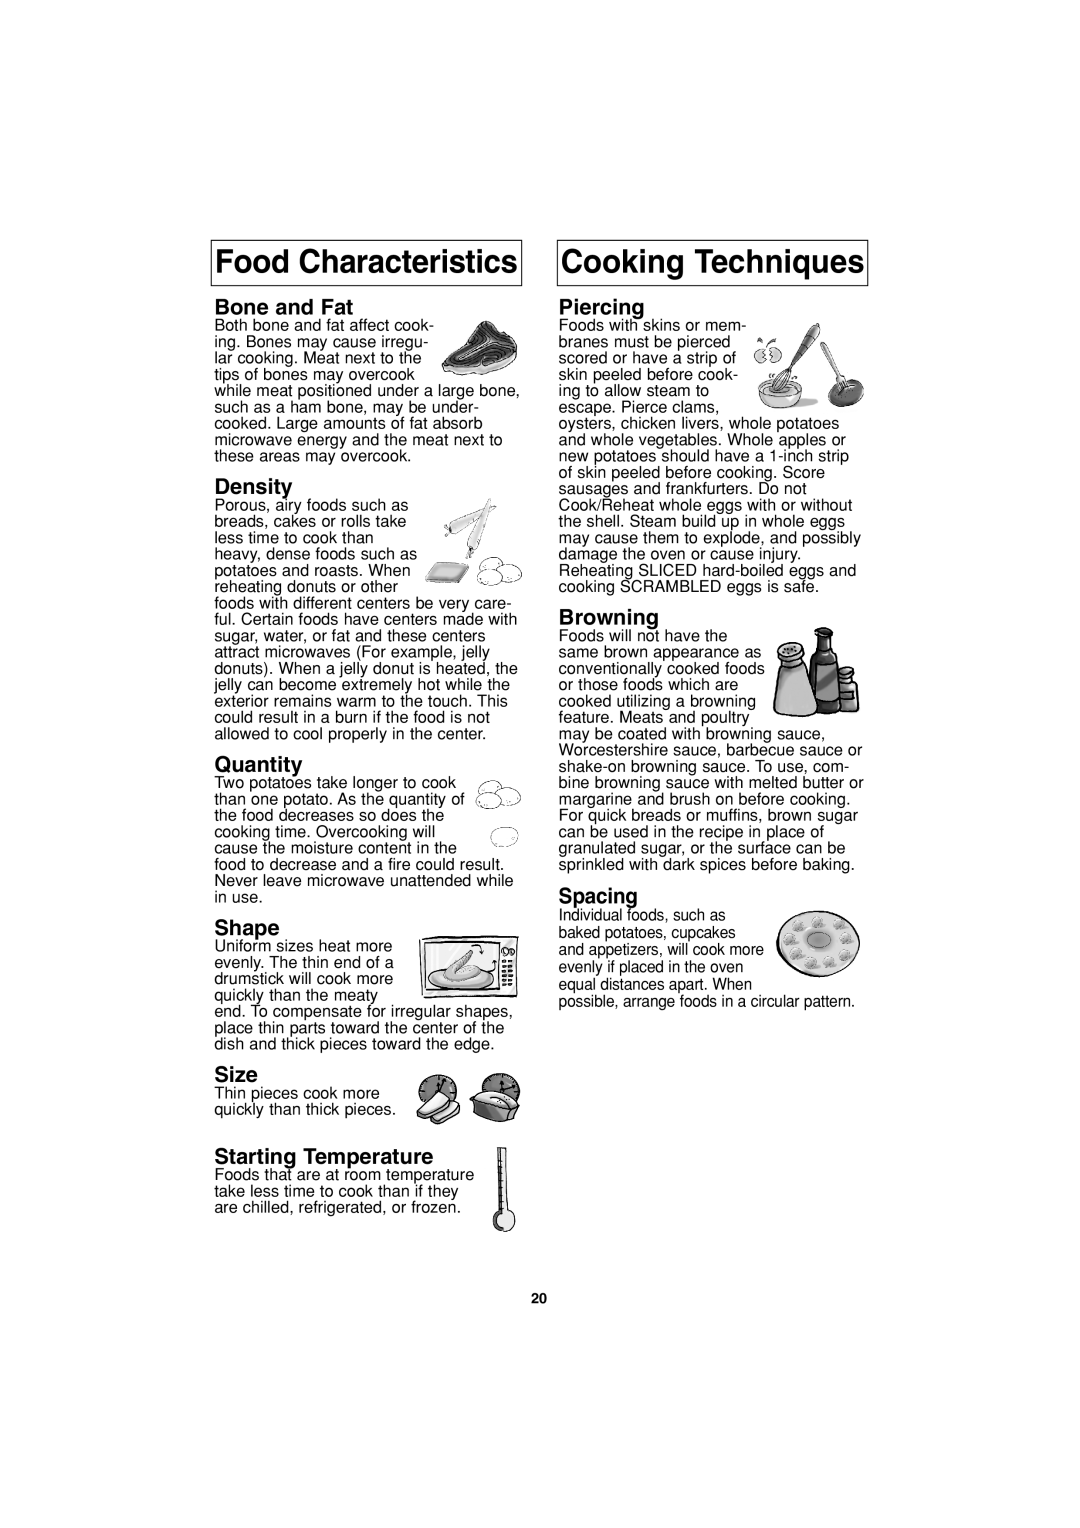 Panasonic NN-S753 Food Characteristics, Cooking Techniques, Bone and Fat, Density, Quantity, Shape, Size, Piercing 